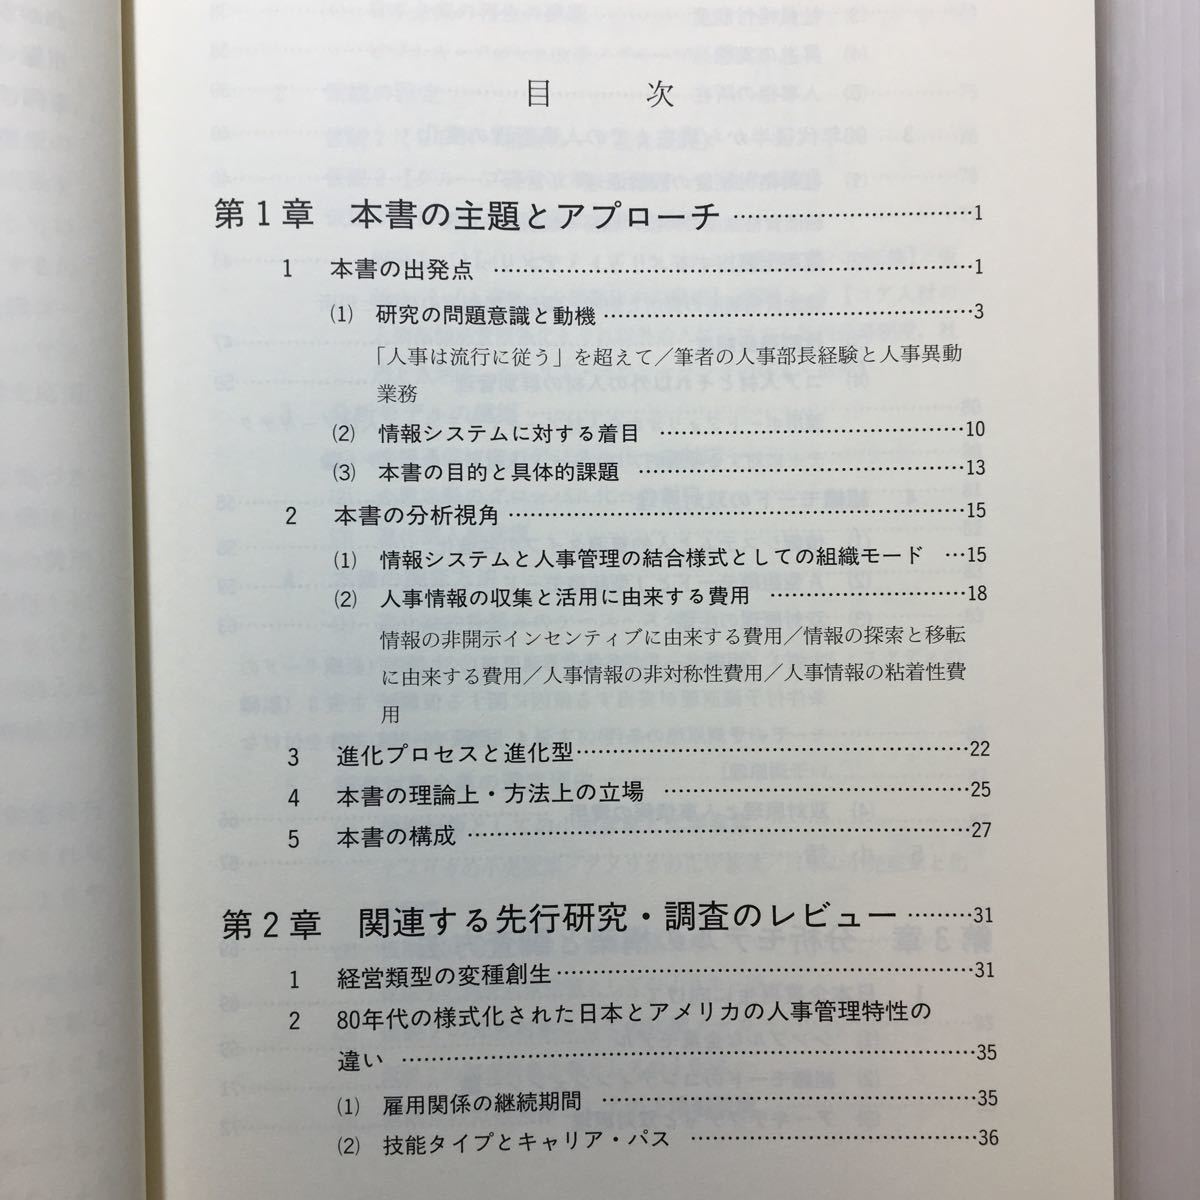 zaa-197♪日本型人事管理―進化型の発生プロセスと機能性 単行本 2006/7/1 平野 光俊 (著)